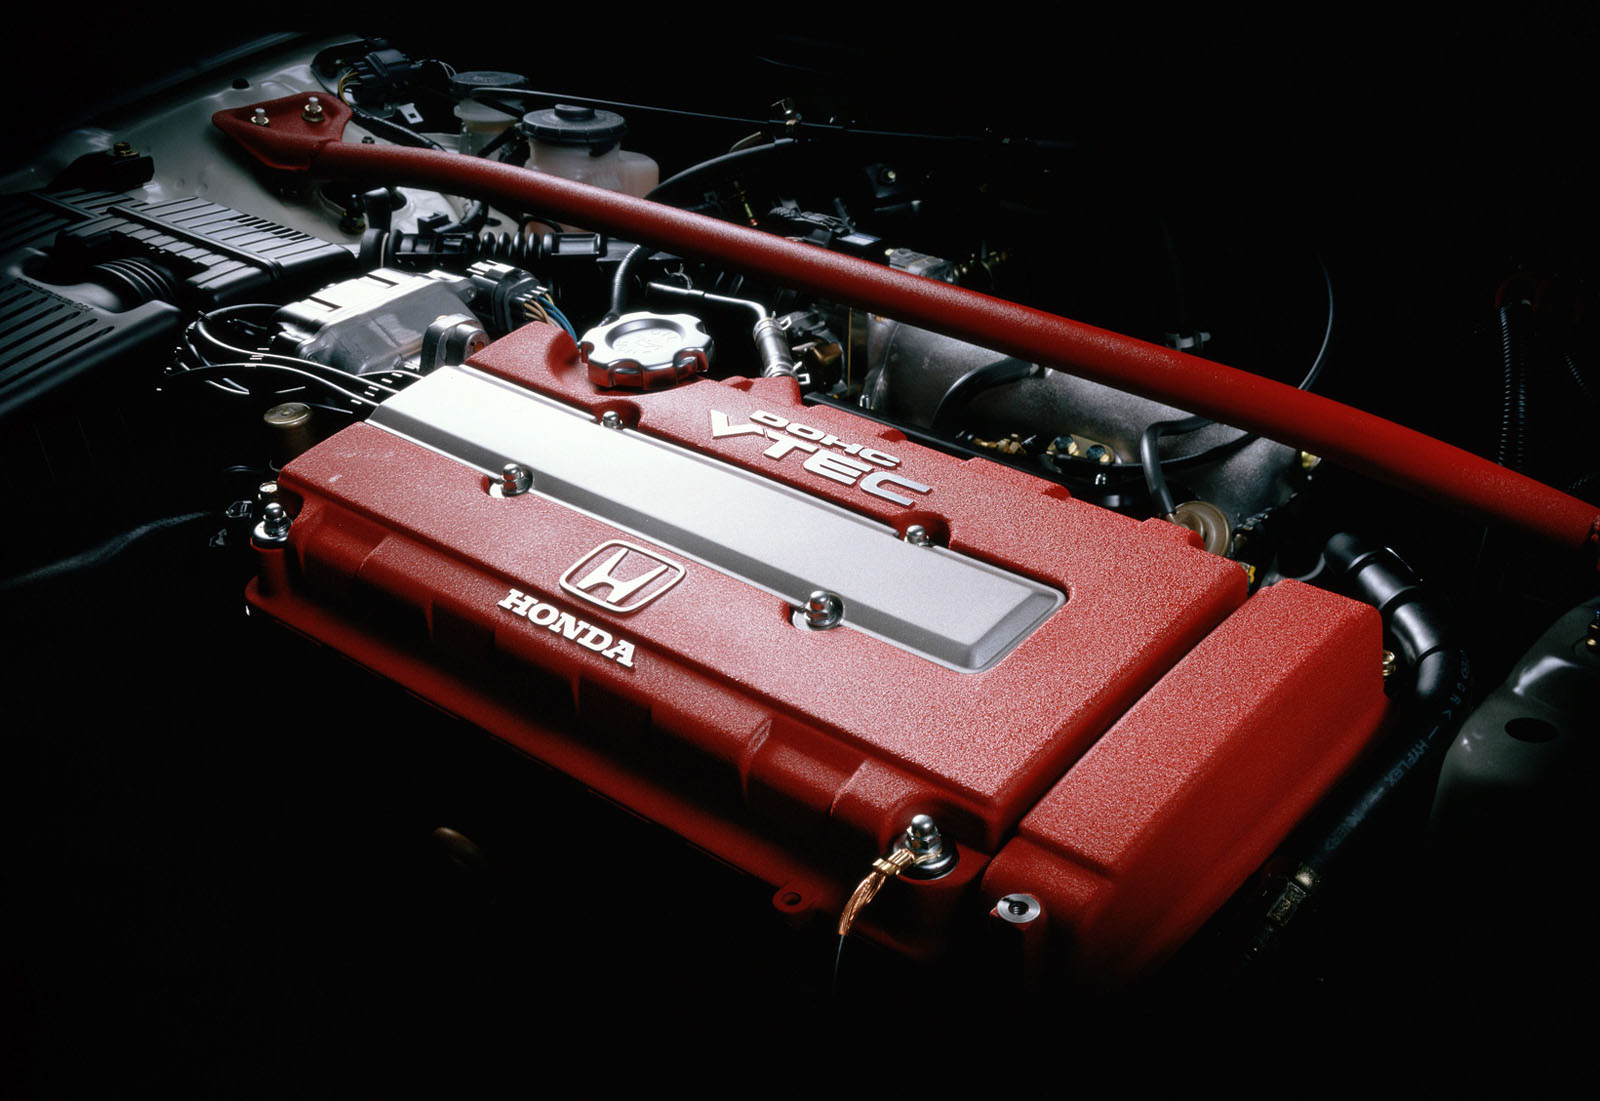 Motor B16A